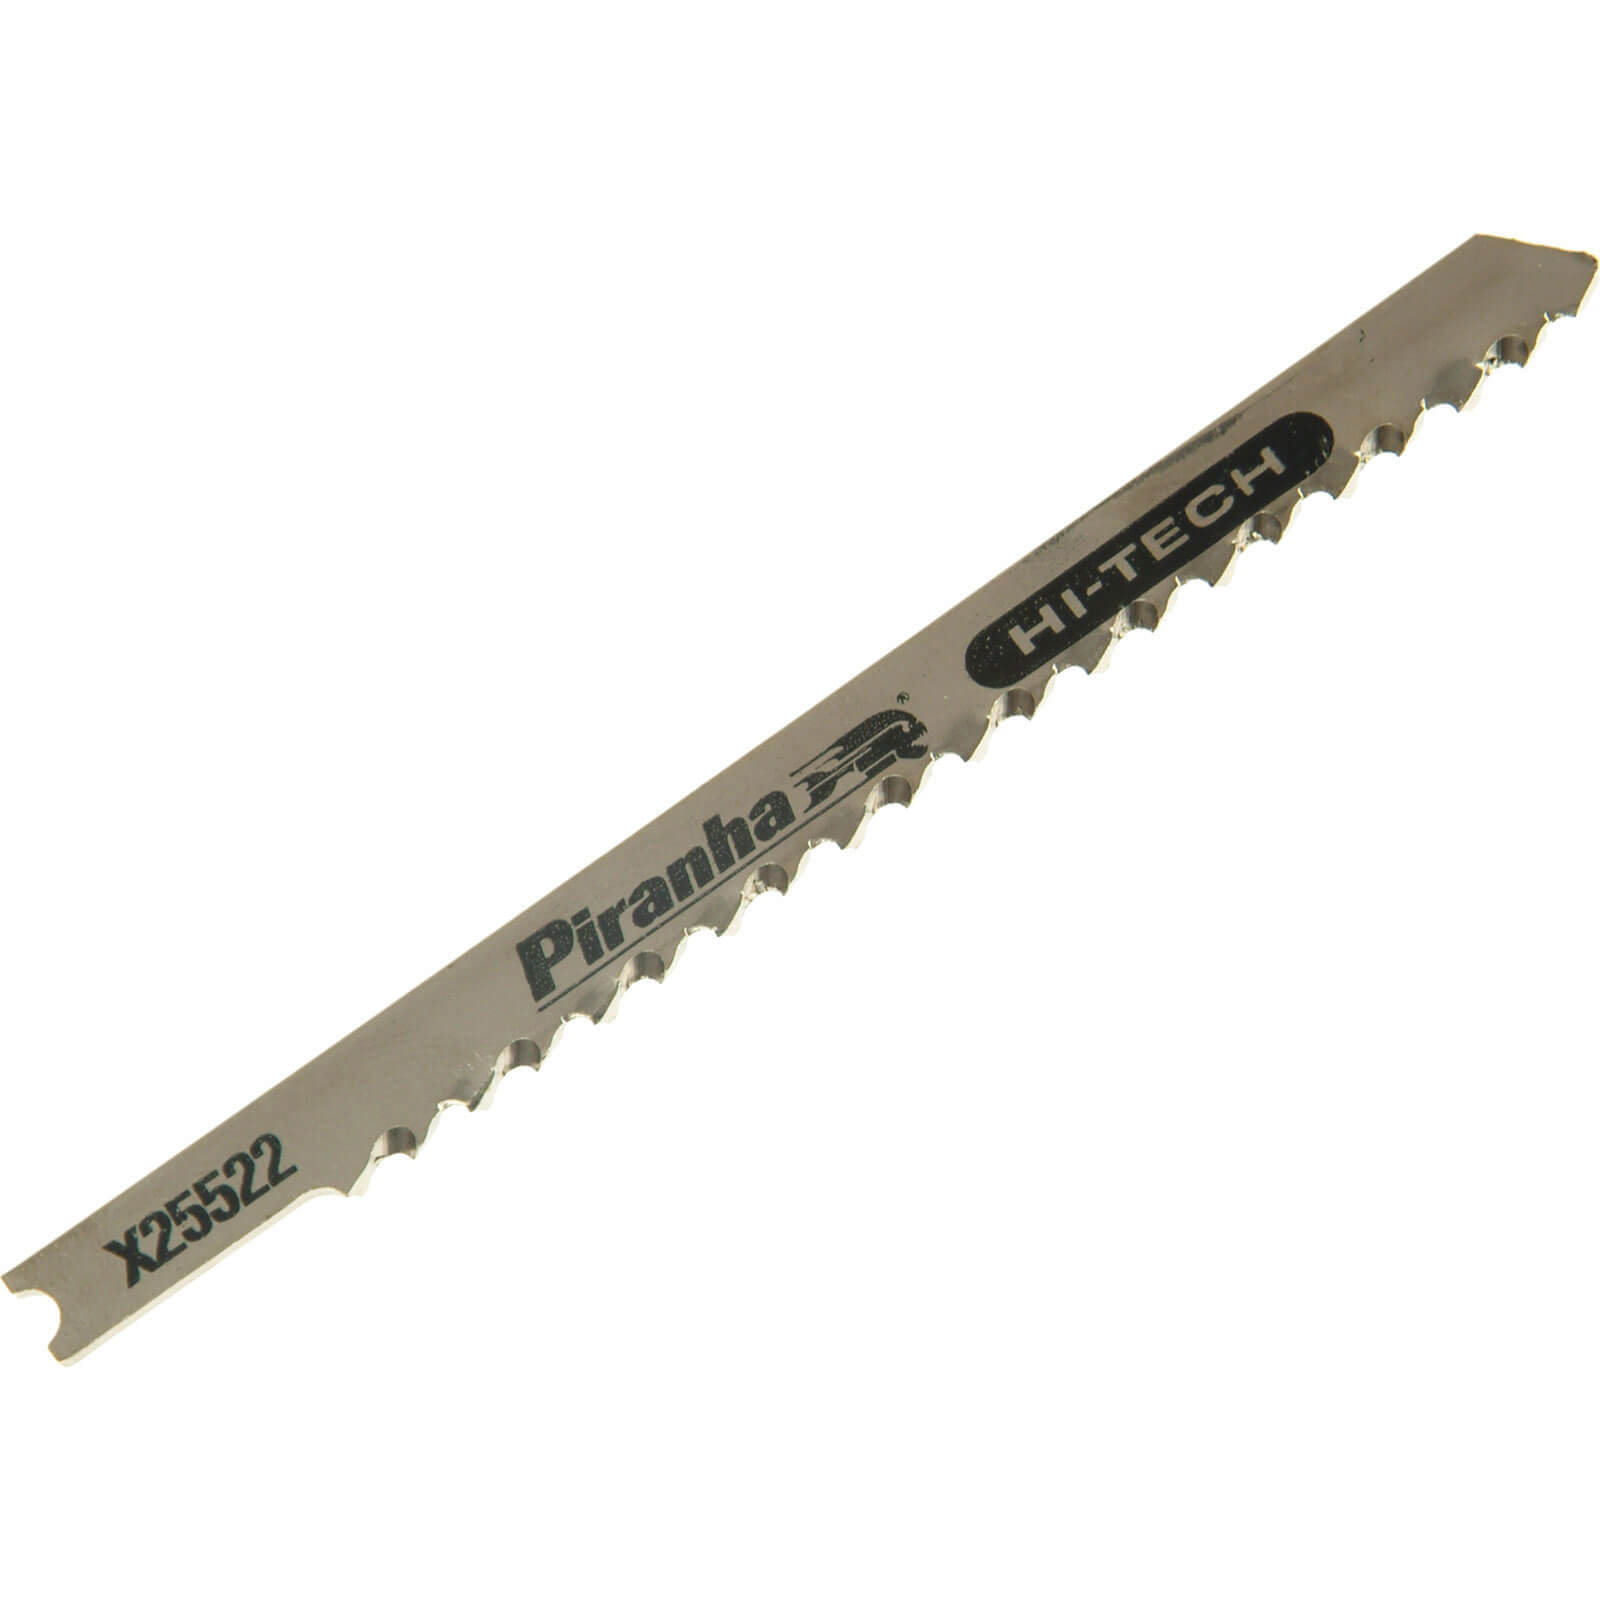 Image of Black and Decker X25522 Piranha Hi Tech Wood HCS Fast U Shank Jigsaw Blades Pack of 2